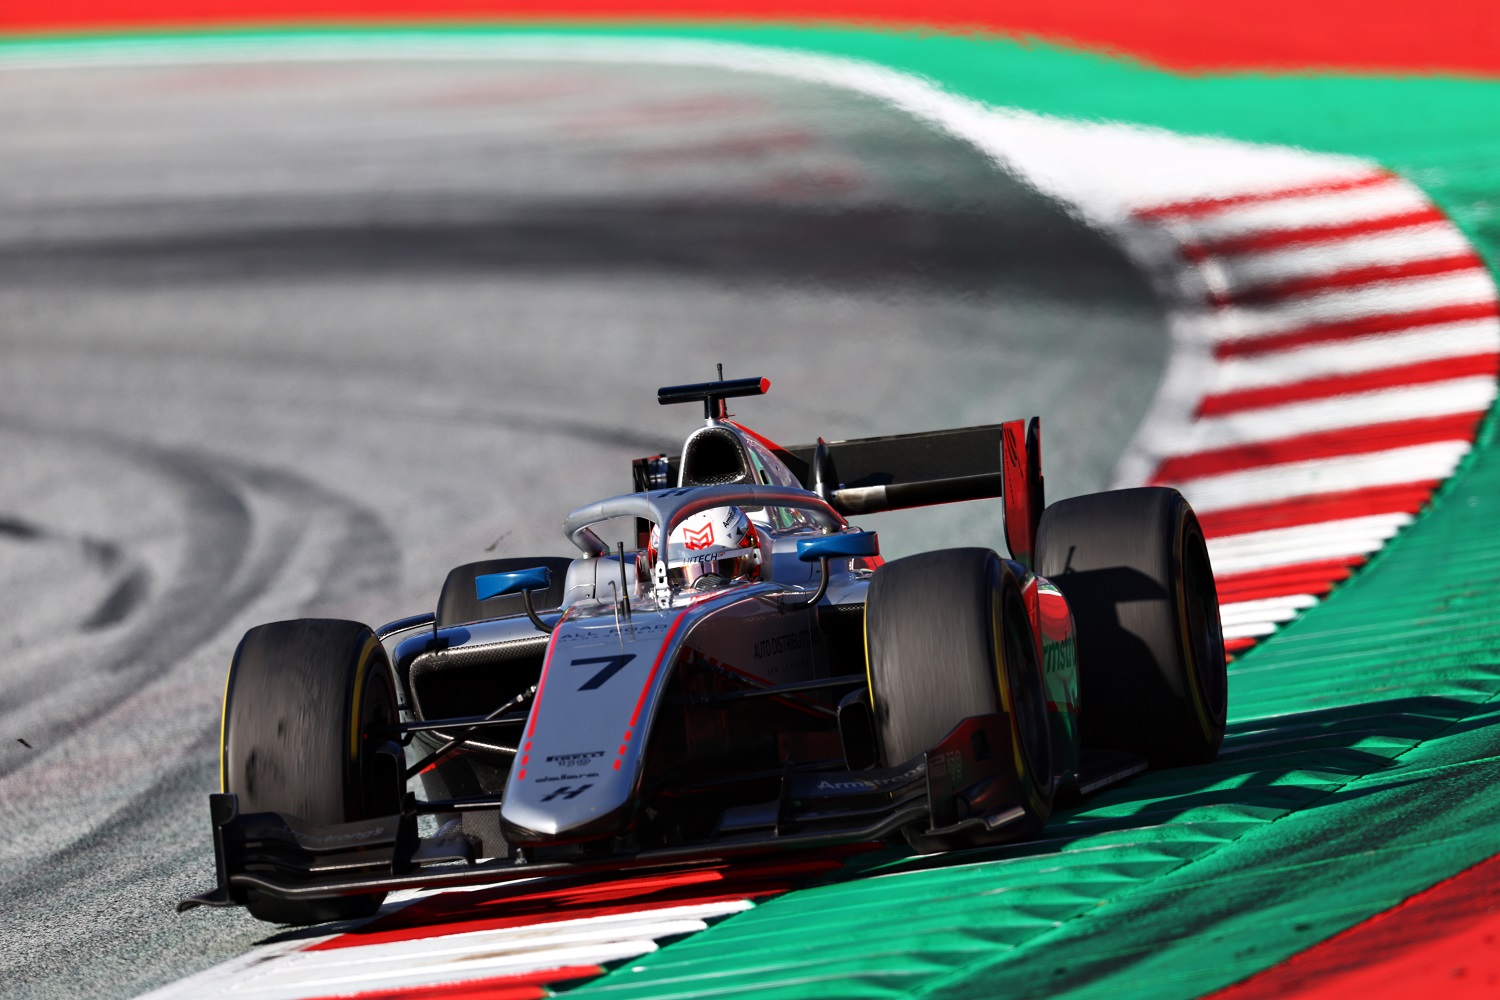 F1 Grand Prix of Austria - Sprint